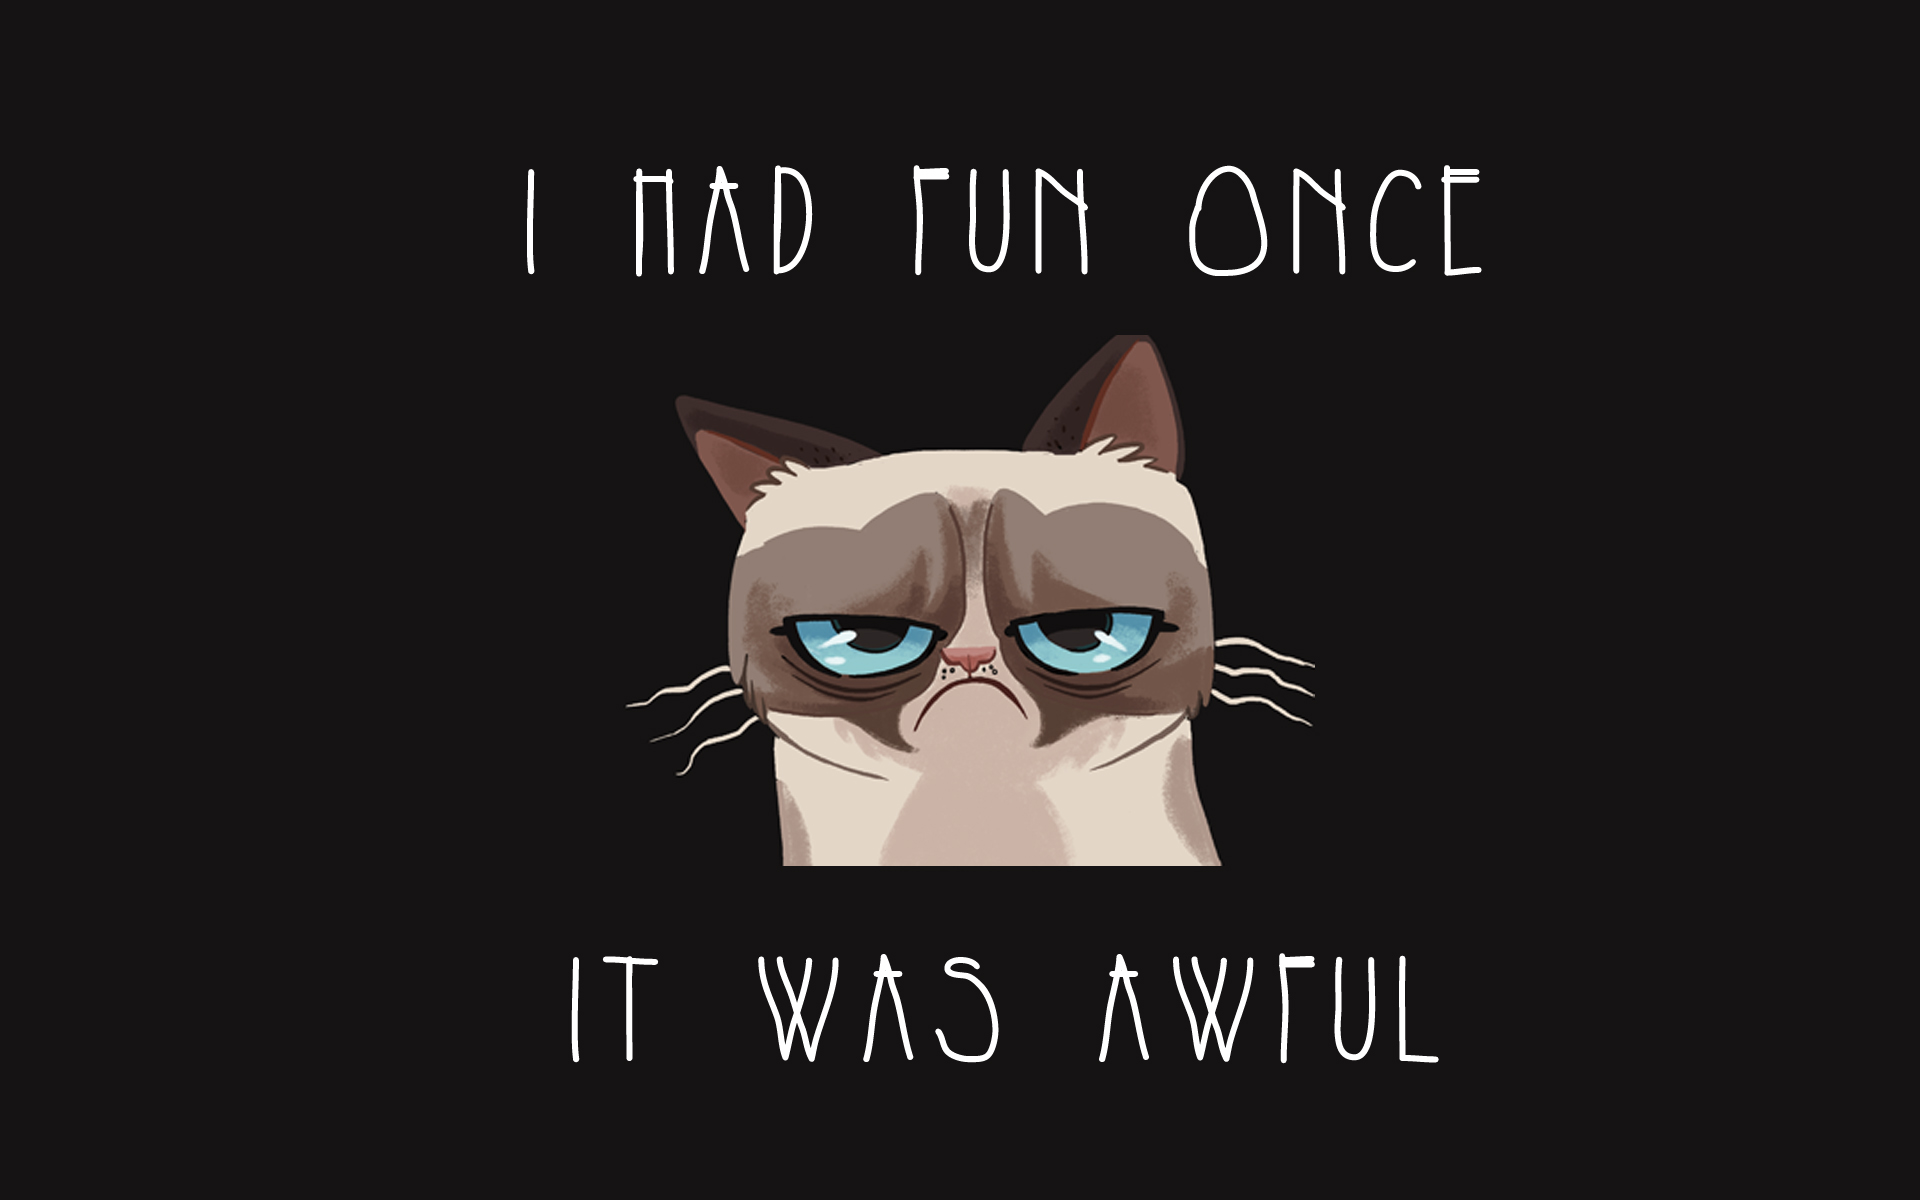 Grumpy Cat In Space HD Wallpaper For Desktop